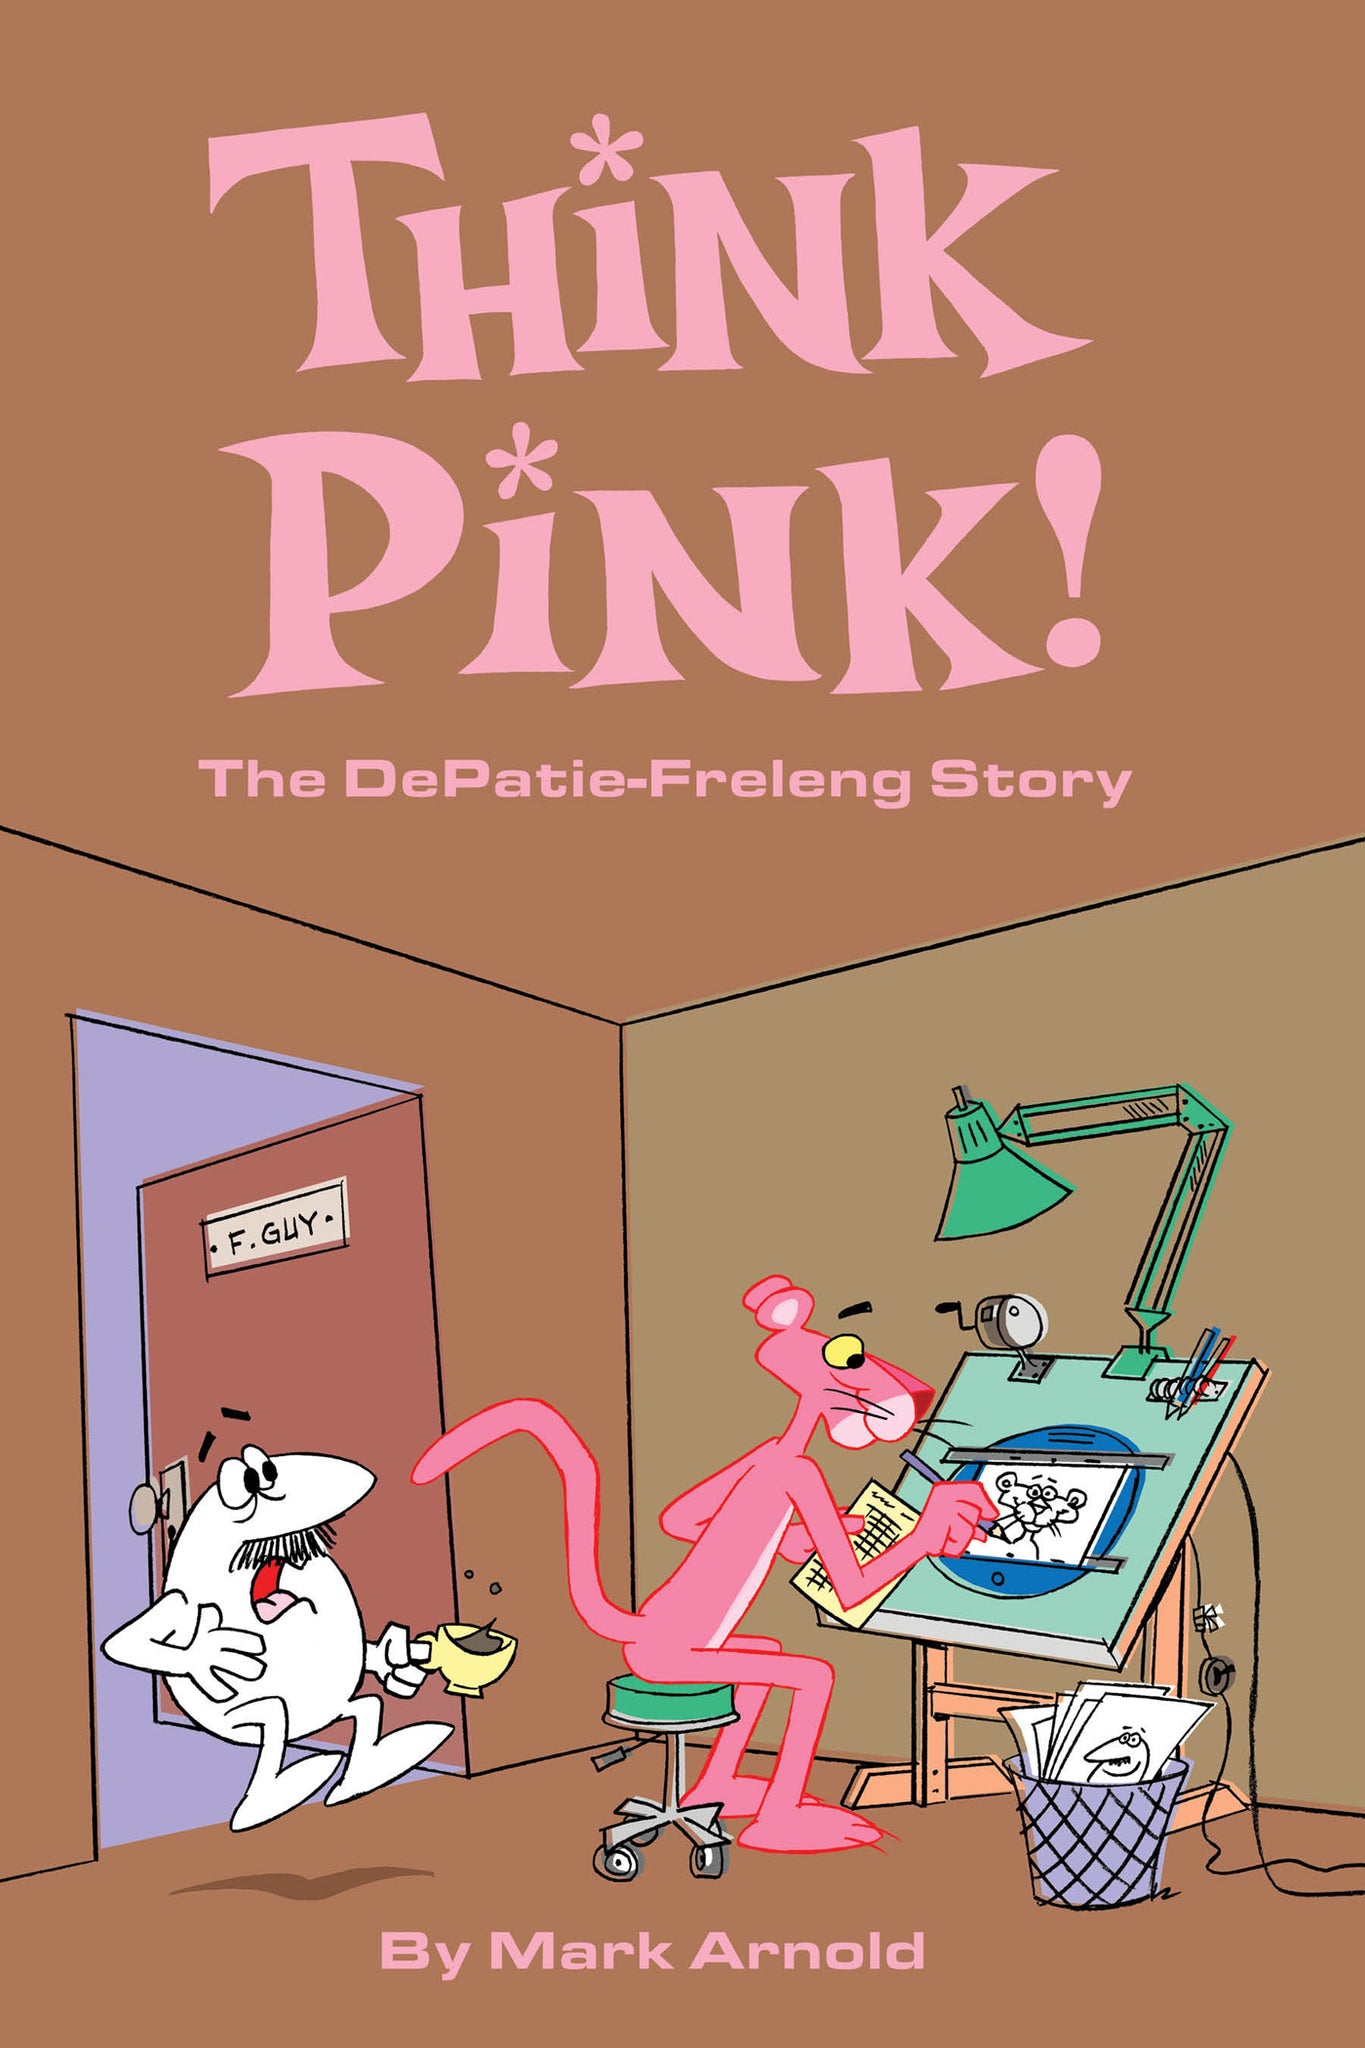 Think Pink: The Story of DePatie-Freleng (ebook) - BearManor Manor